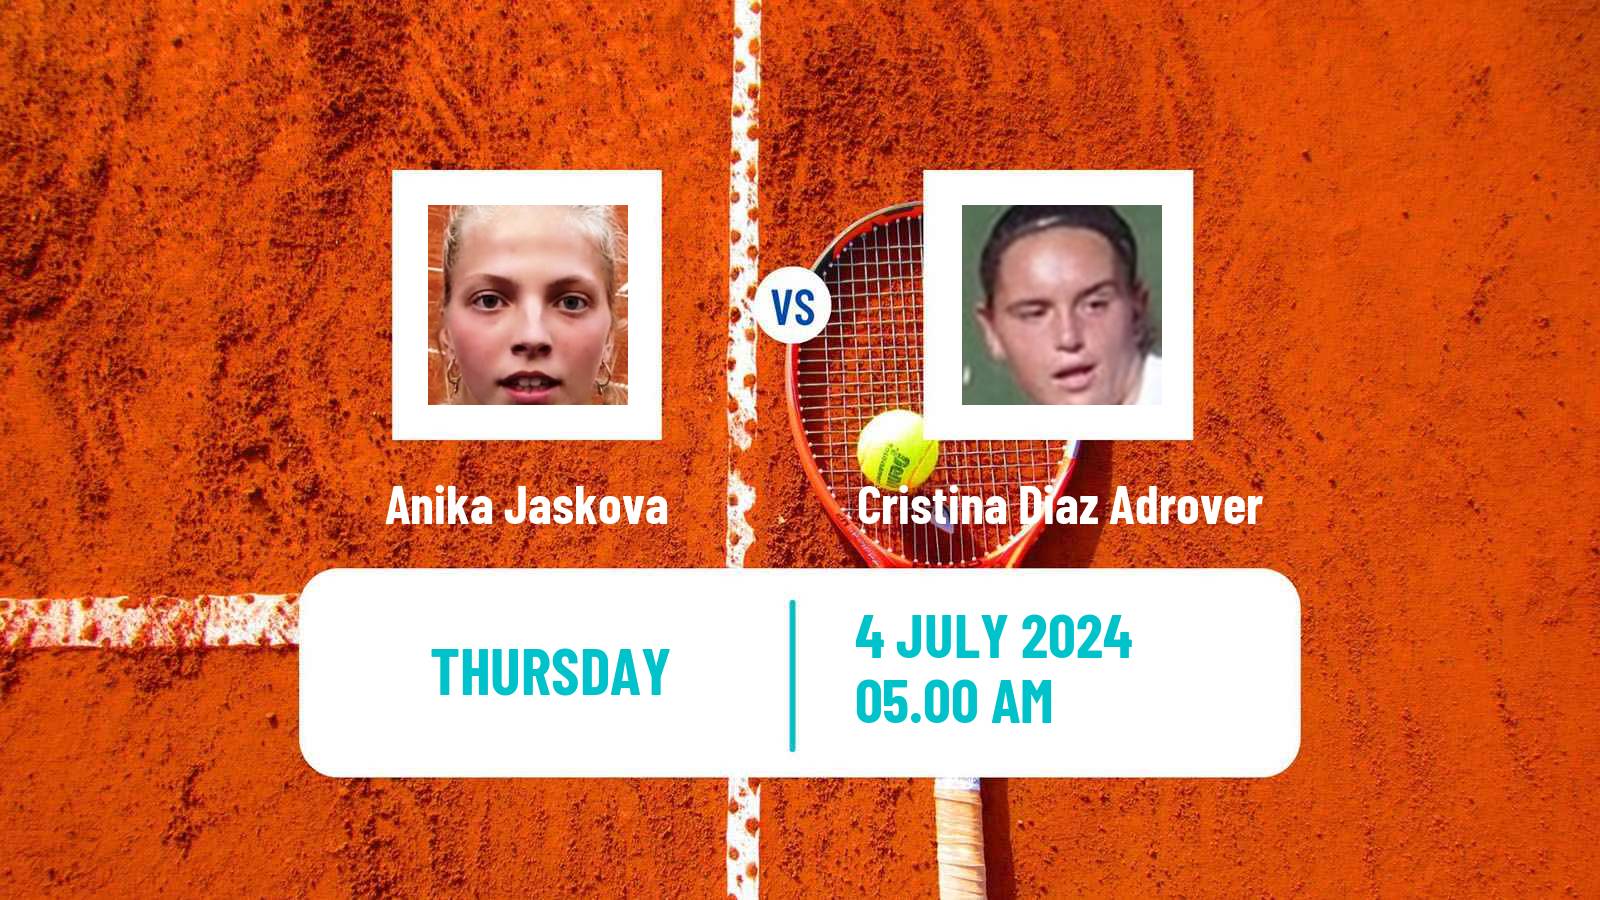 Tennis ITF W15 Mogyorod Women Anika Jaskova - Cristina Diaz Adrover